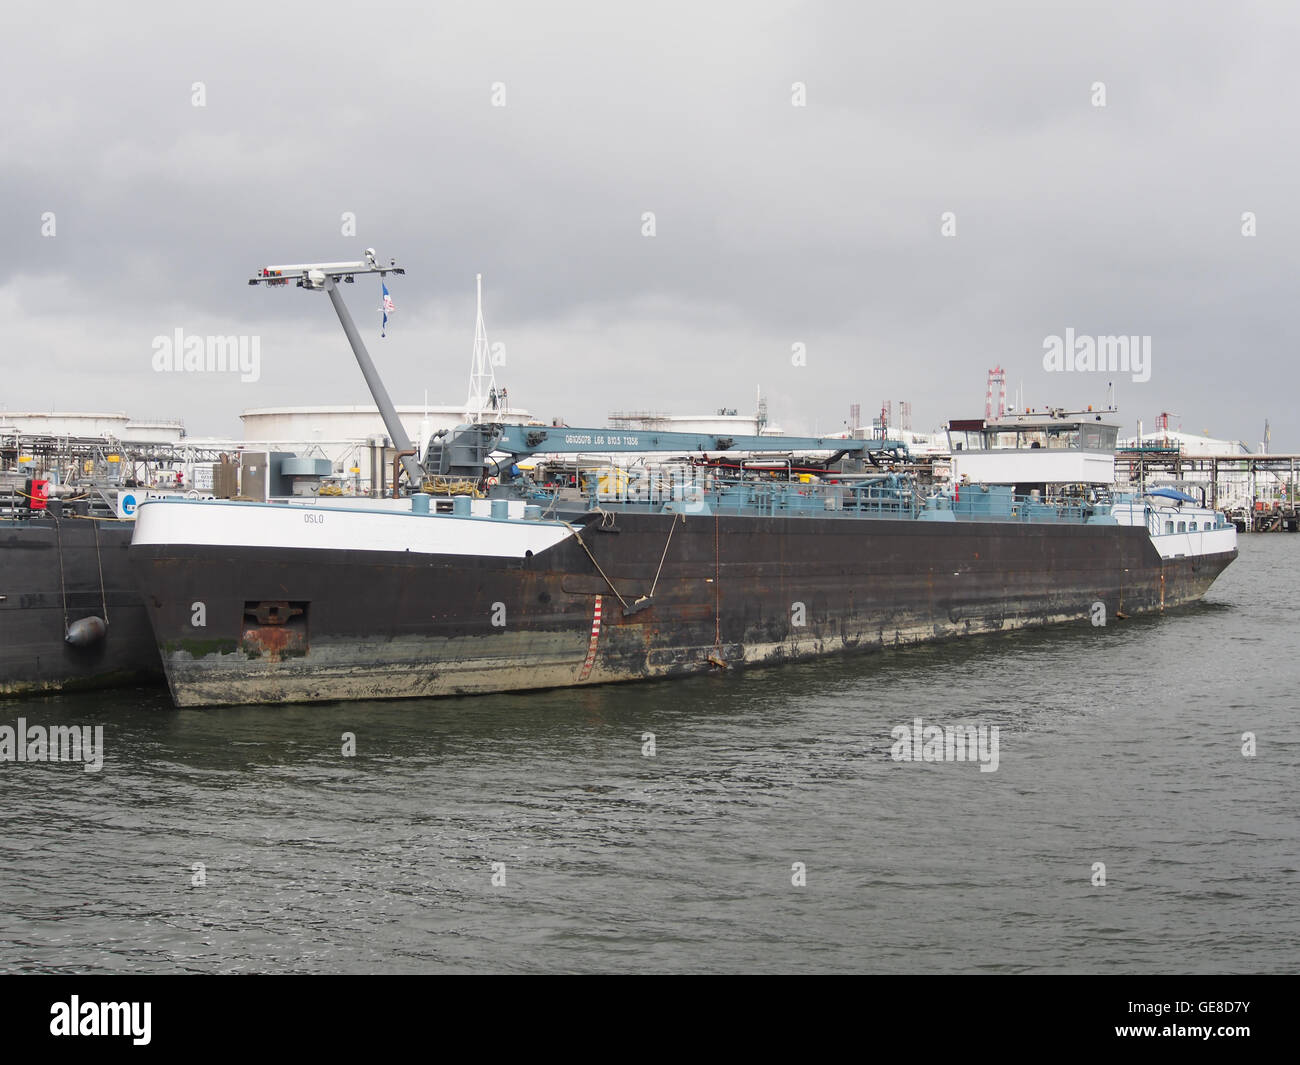 Oslo (ship, 2010), ENI 06105078 pic3 Stock Photo